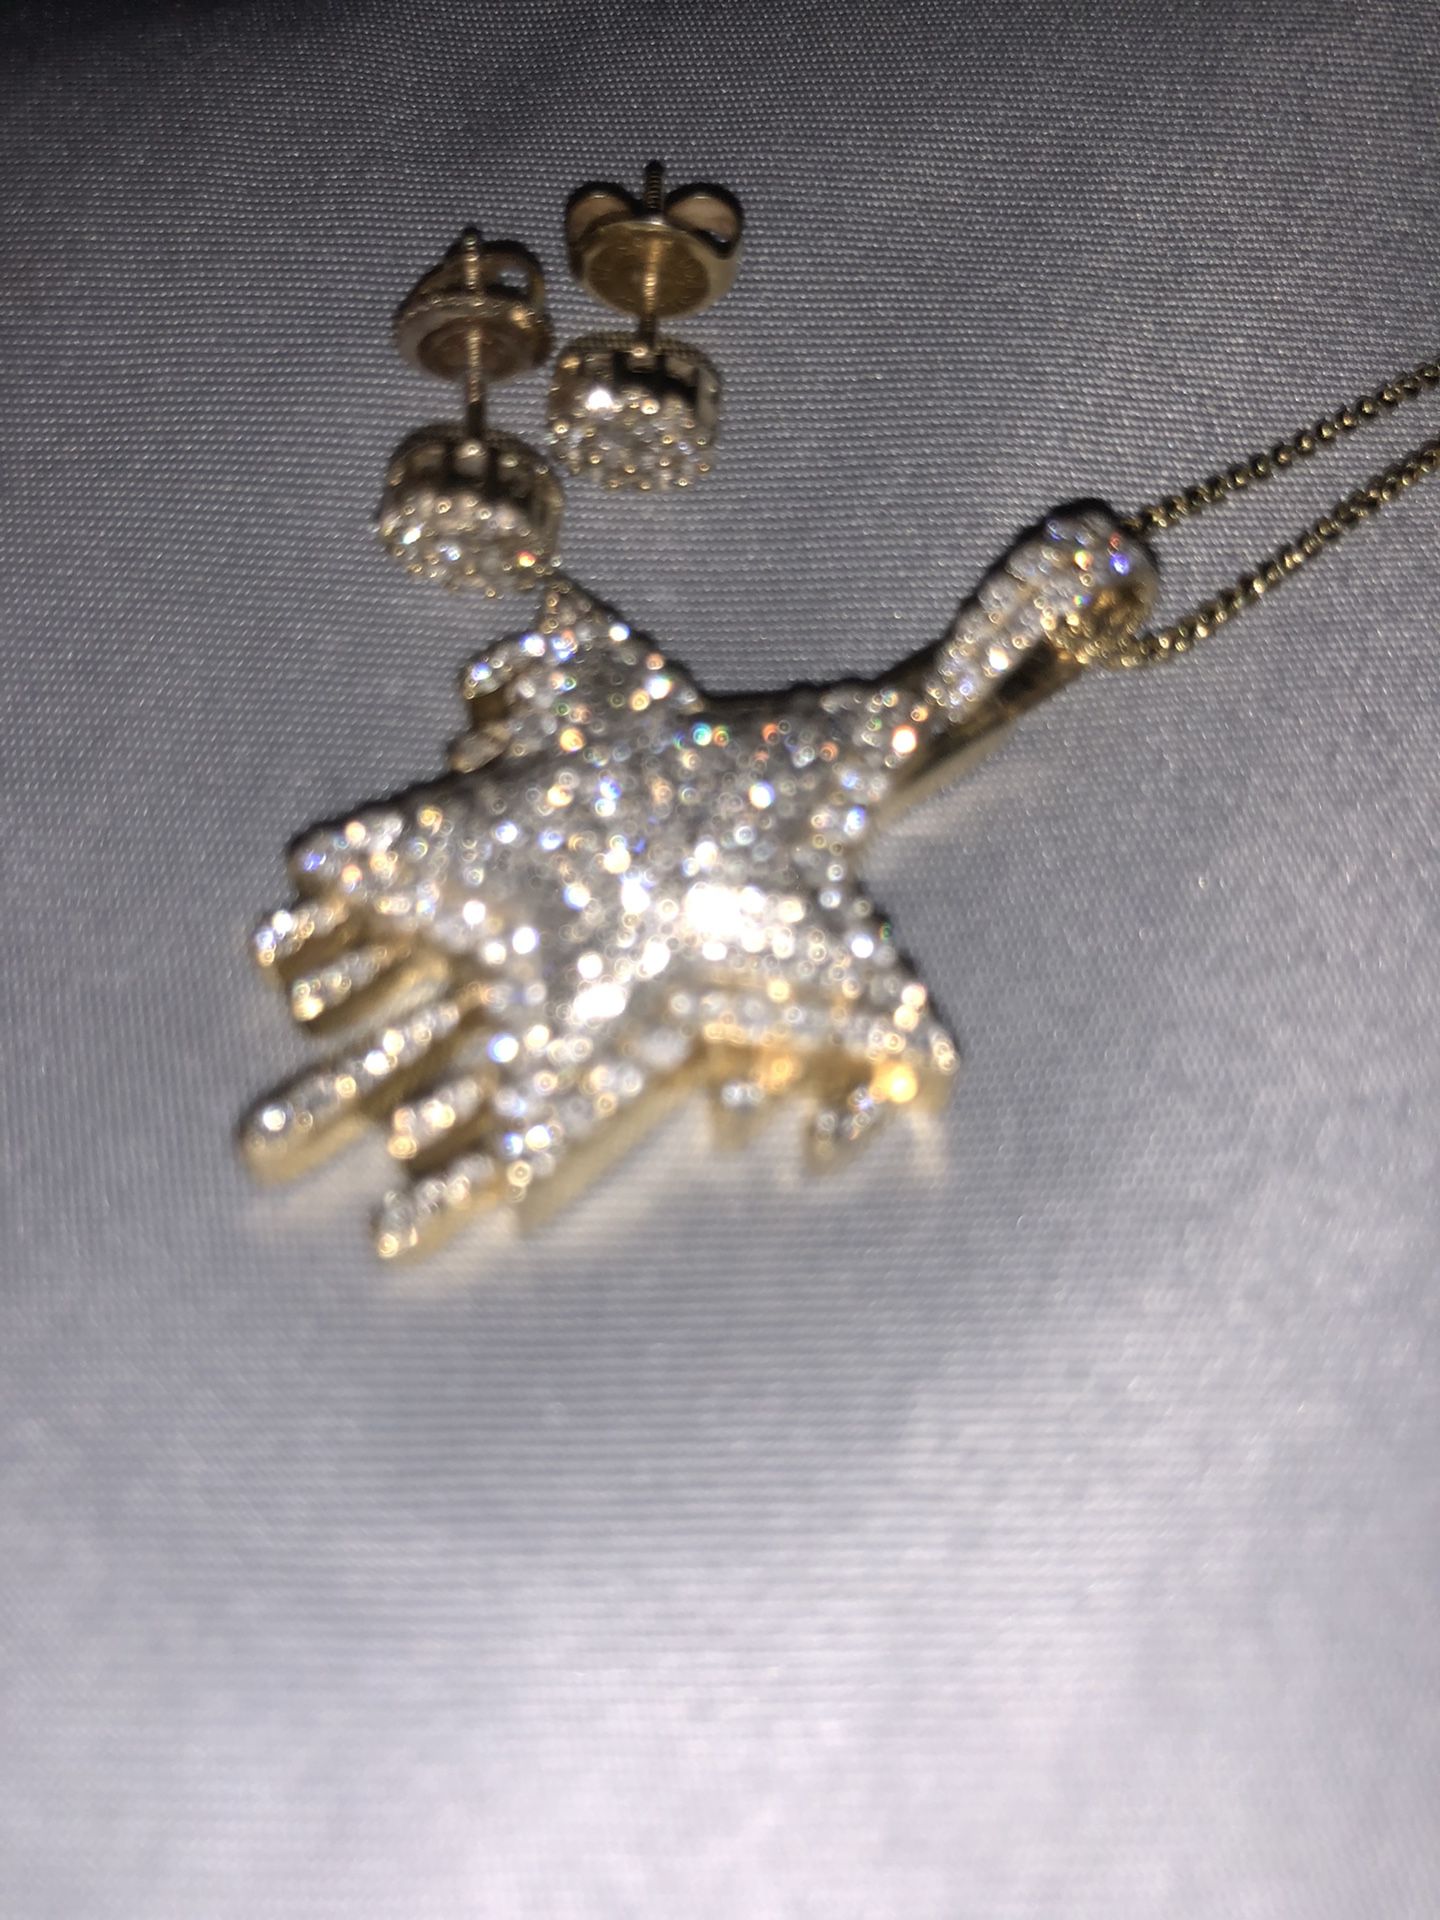 Diamond Chain And Earrings